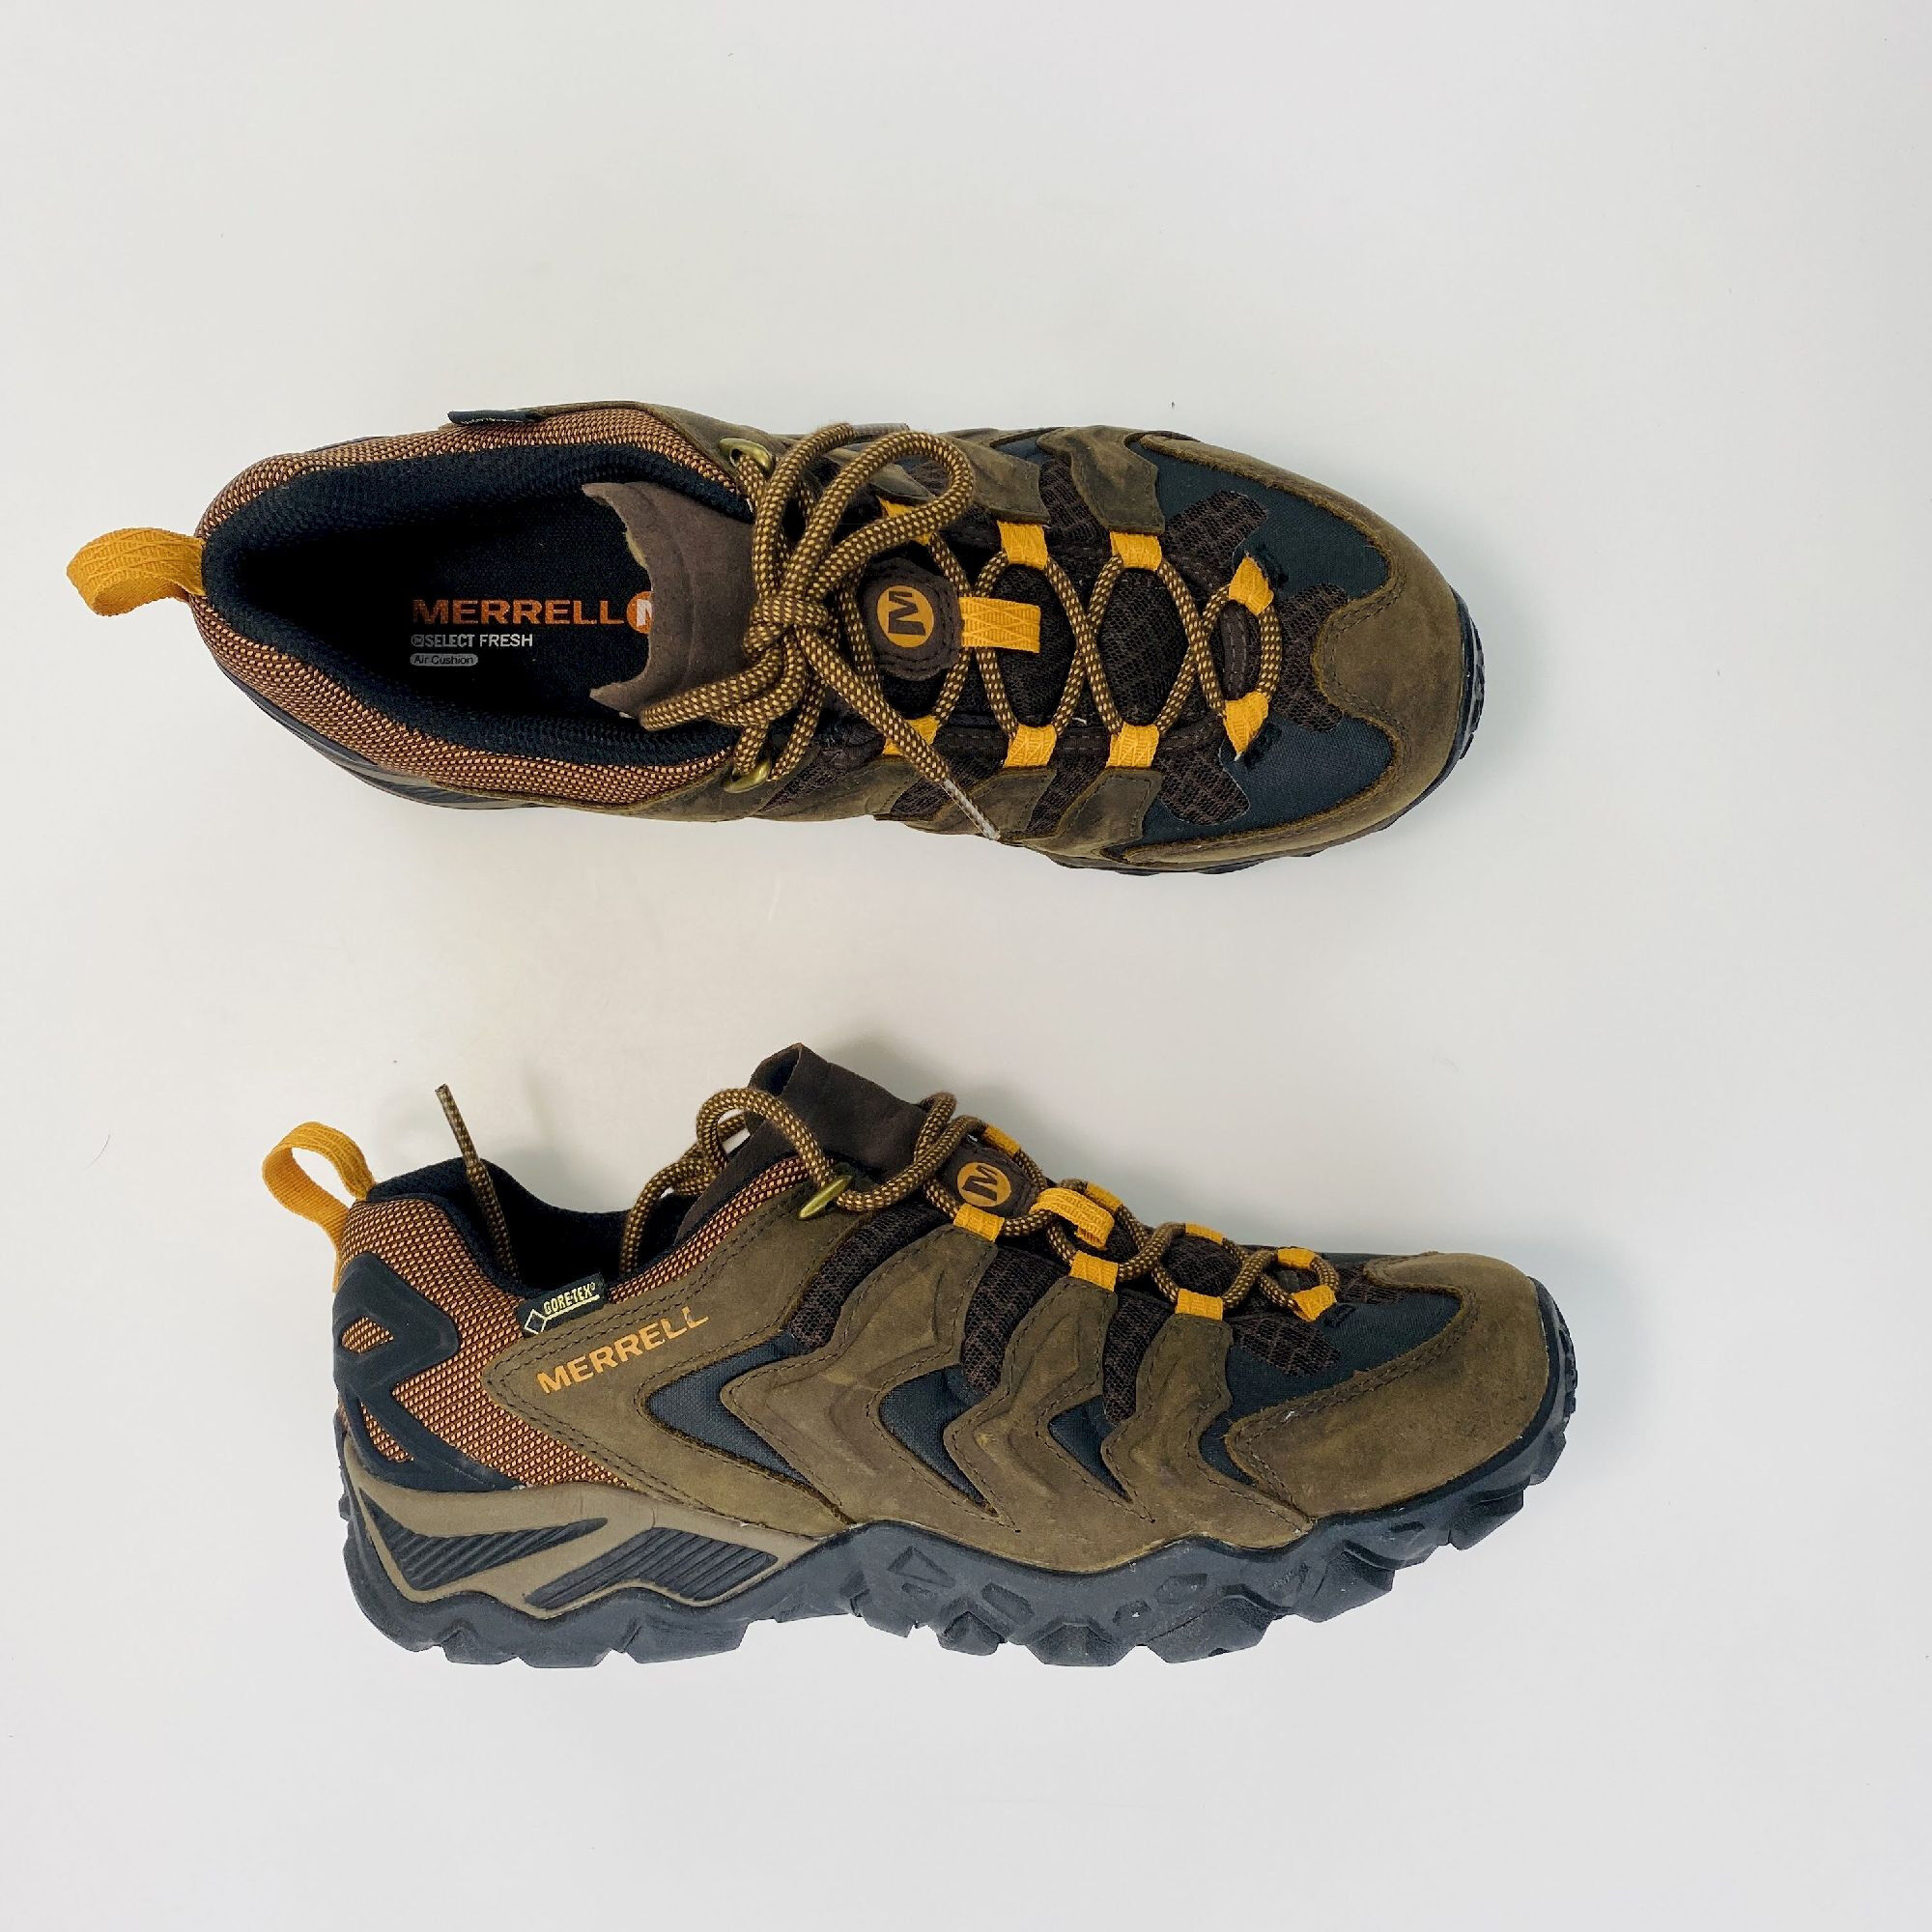 Merrell Seconde main Chaussures randonnée homme - Marron - 43 | Hardloop